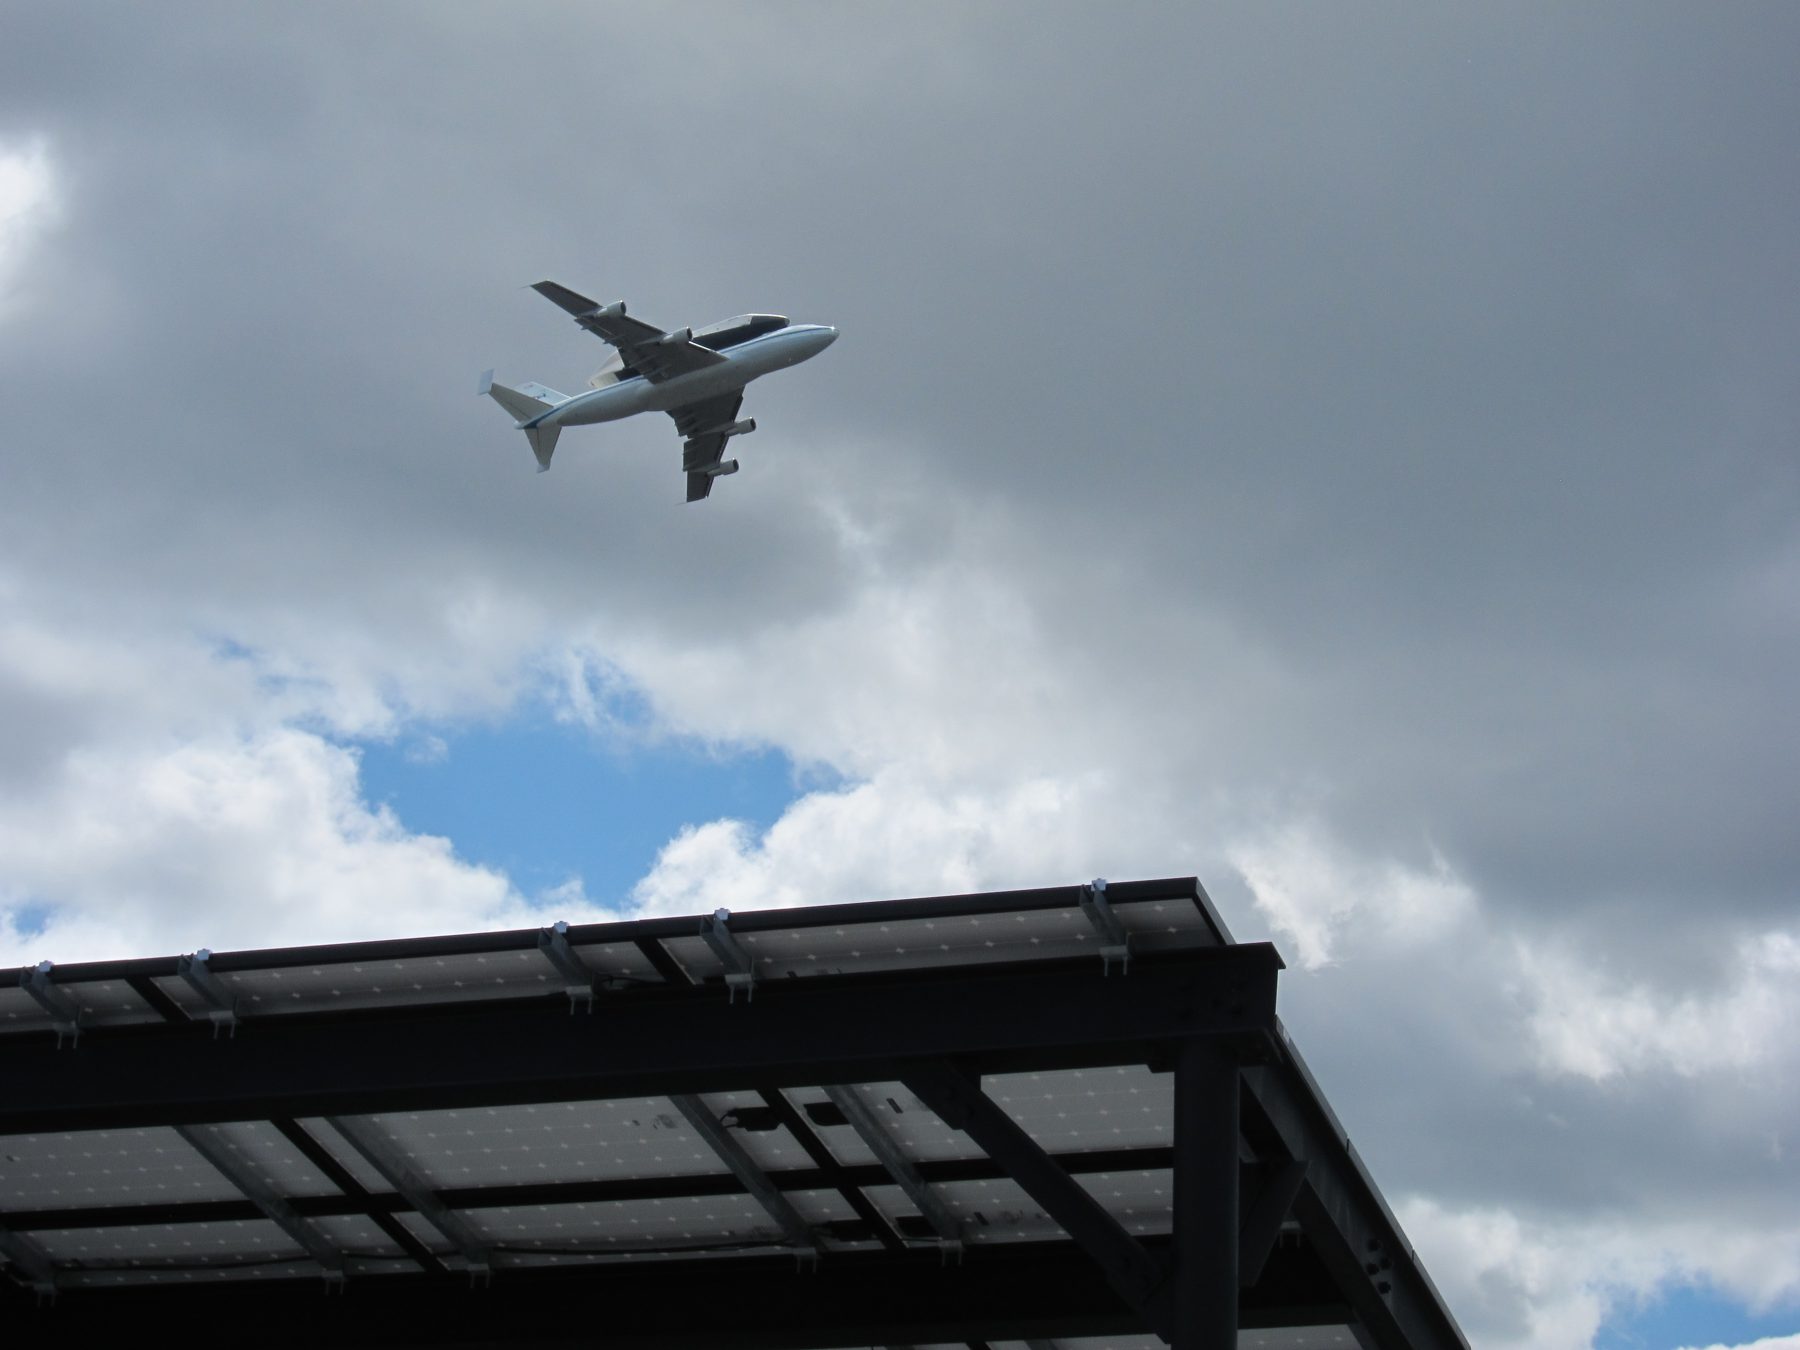 Space Shuttle Enterprise flies over Gateway Elton solar installation